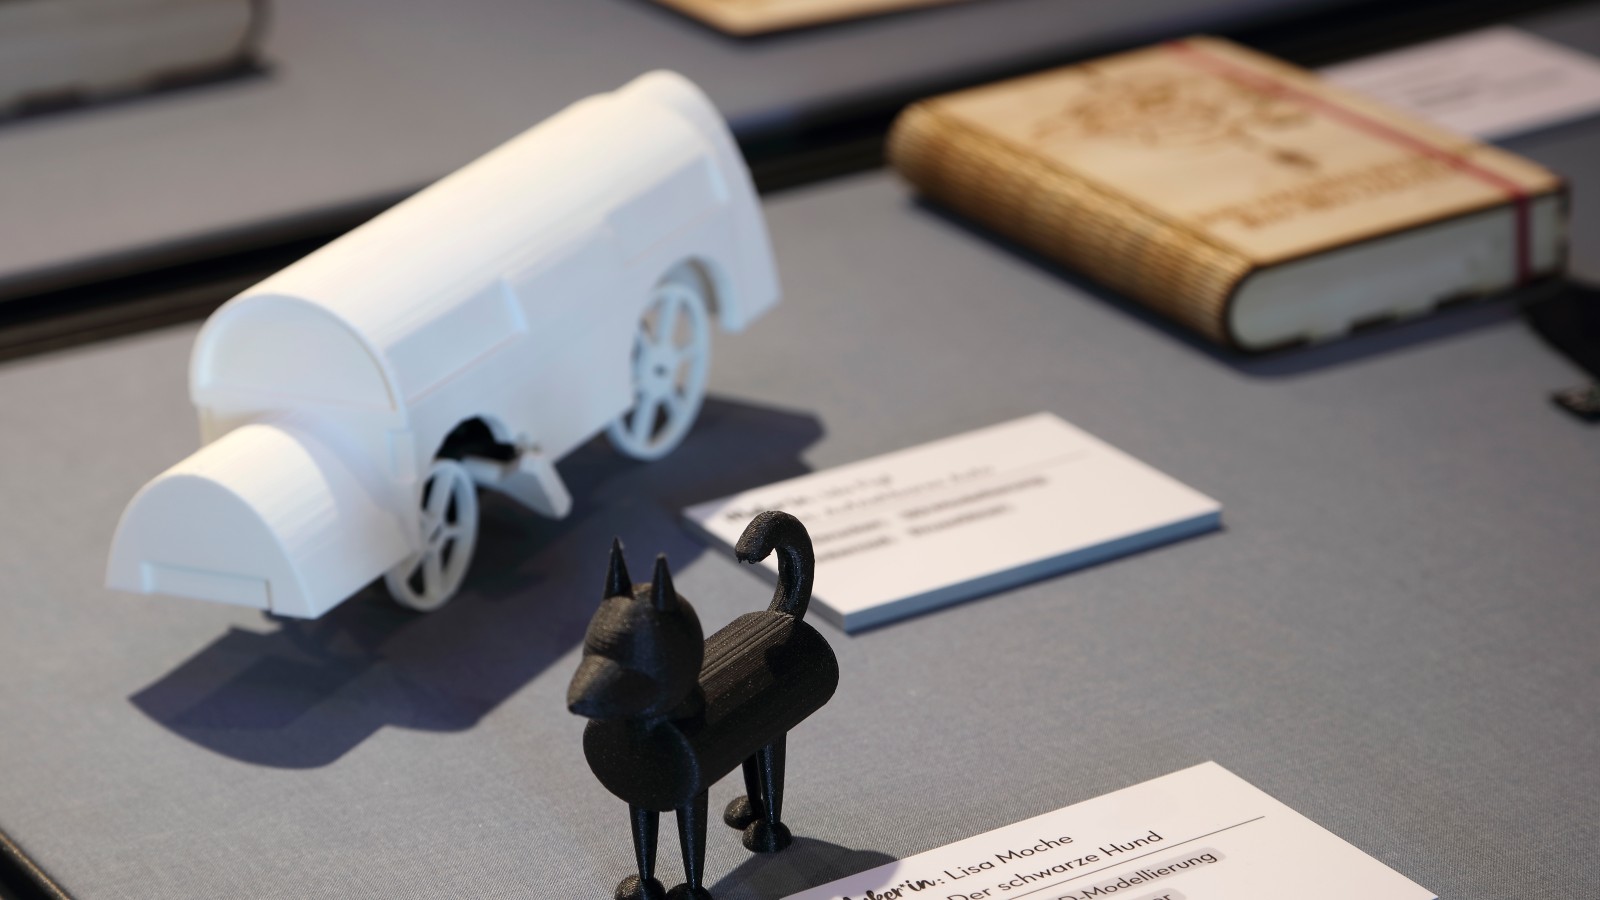 Maker*Sisters Pop-up-Ausstellung 2020 -  Der schwarze Hund, selbstfahrendes Auto, Kompass-Buch